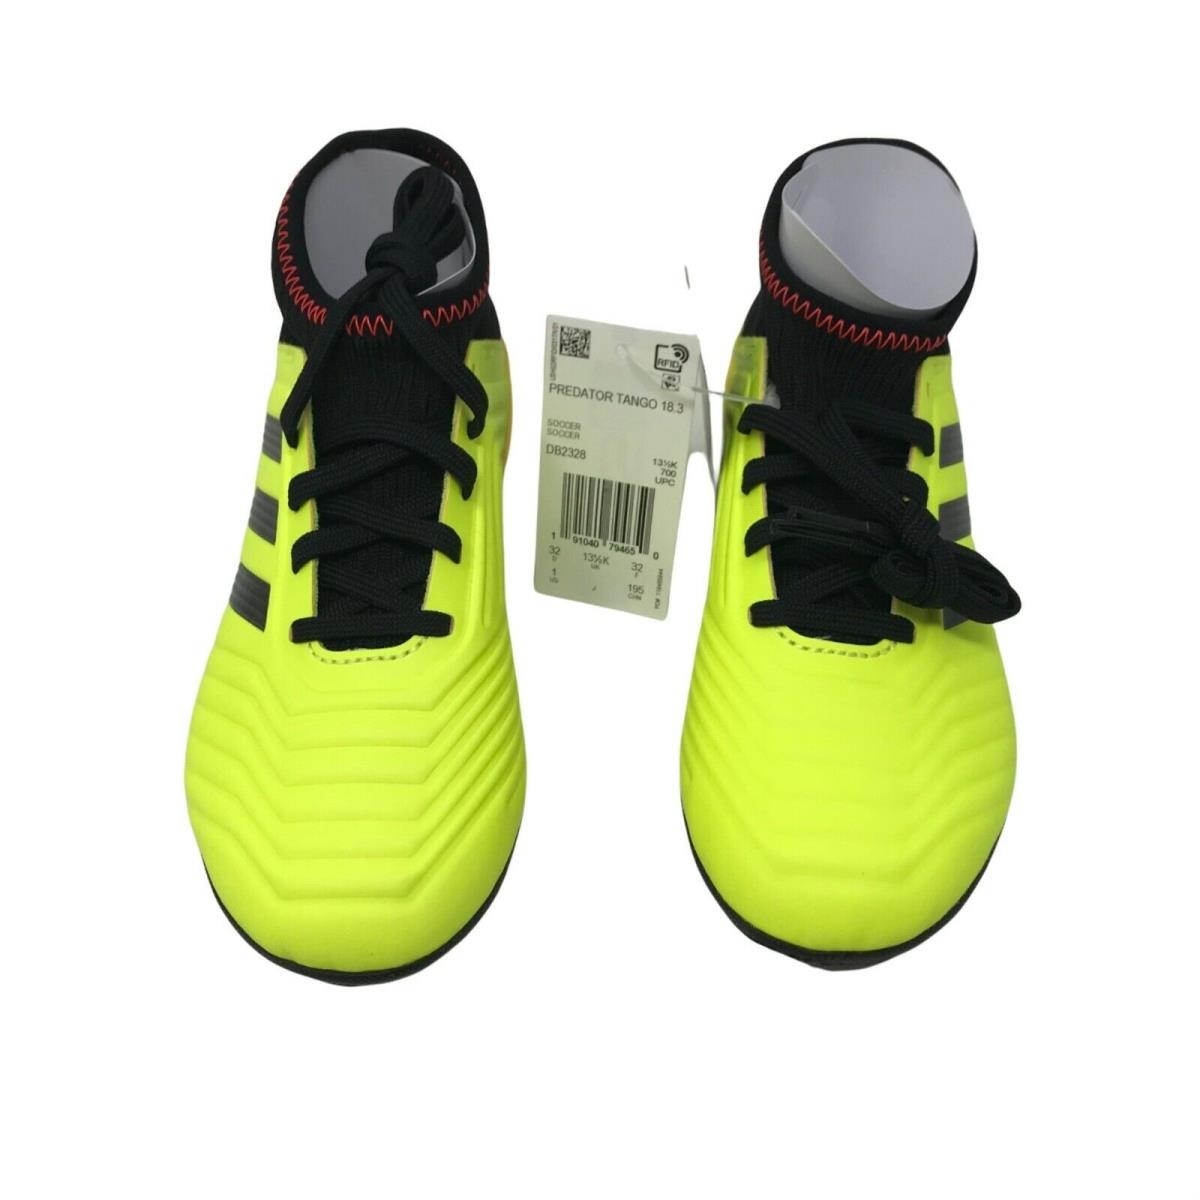 Adidas Kids` Predator Tango Soccer Shoe Size 1 - Yellow/Black